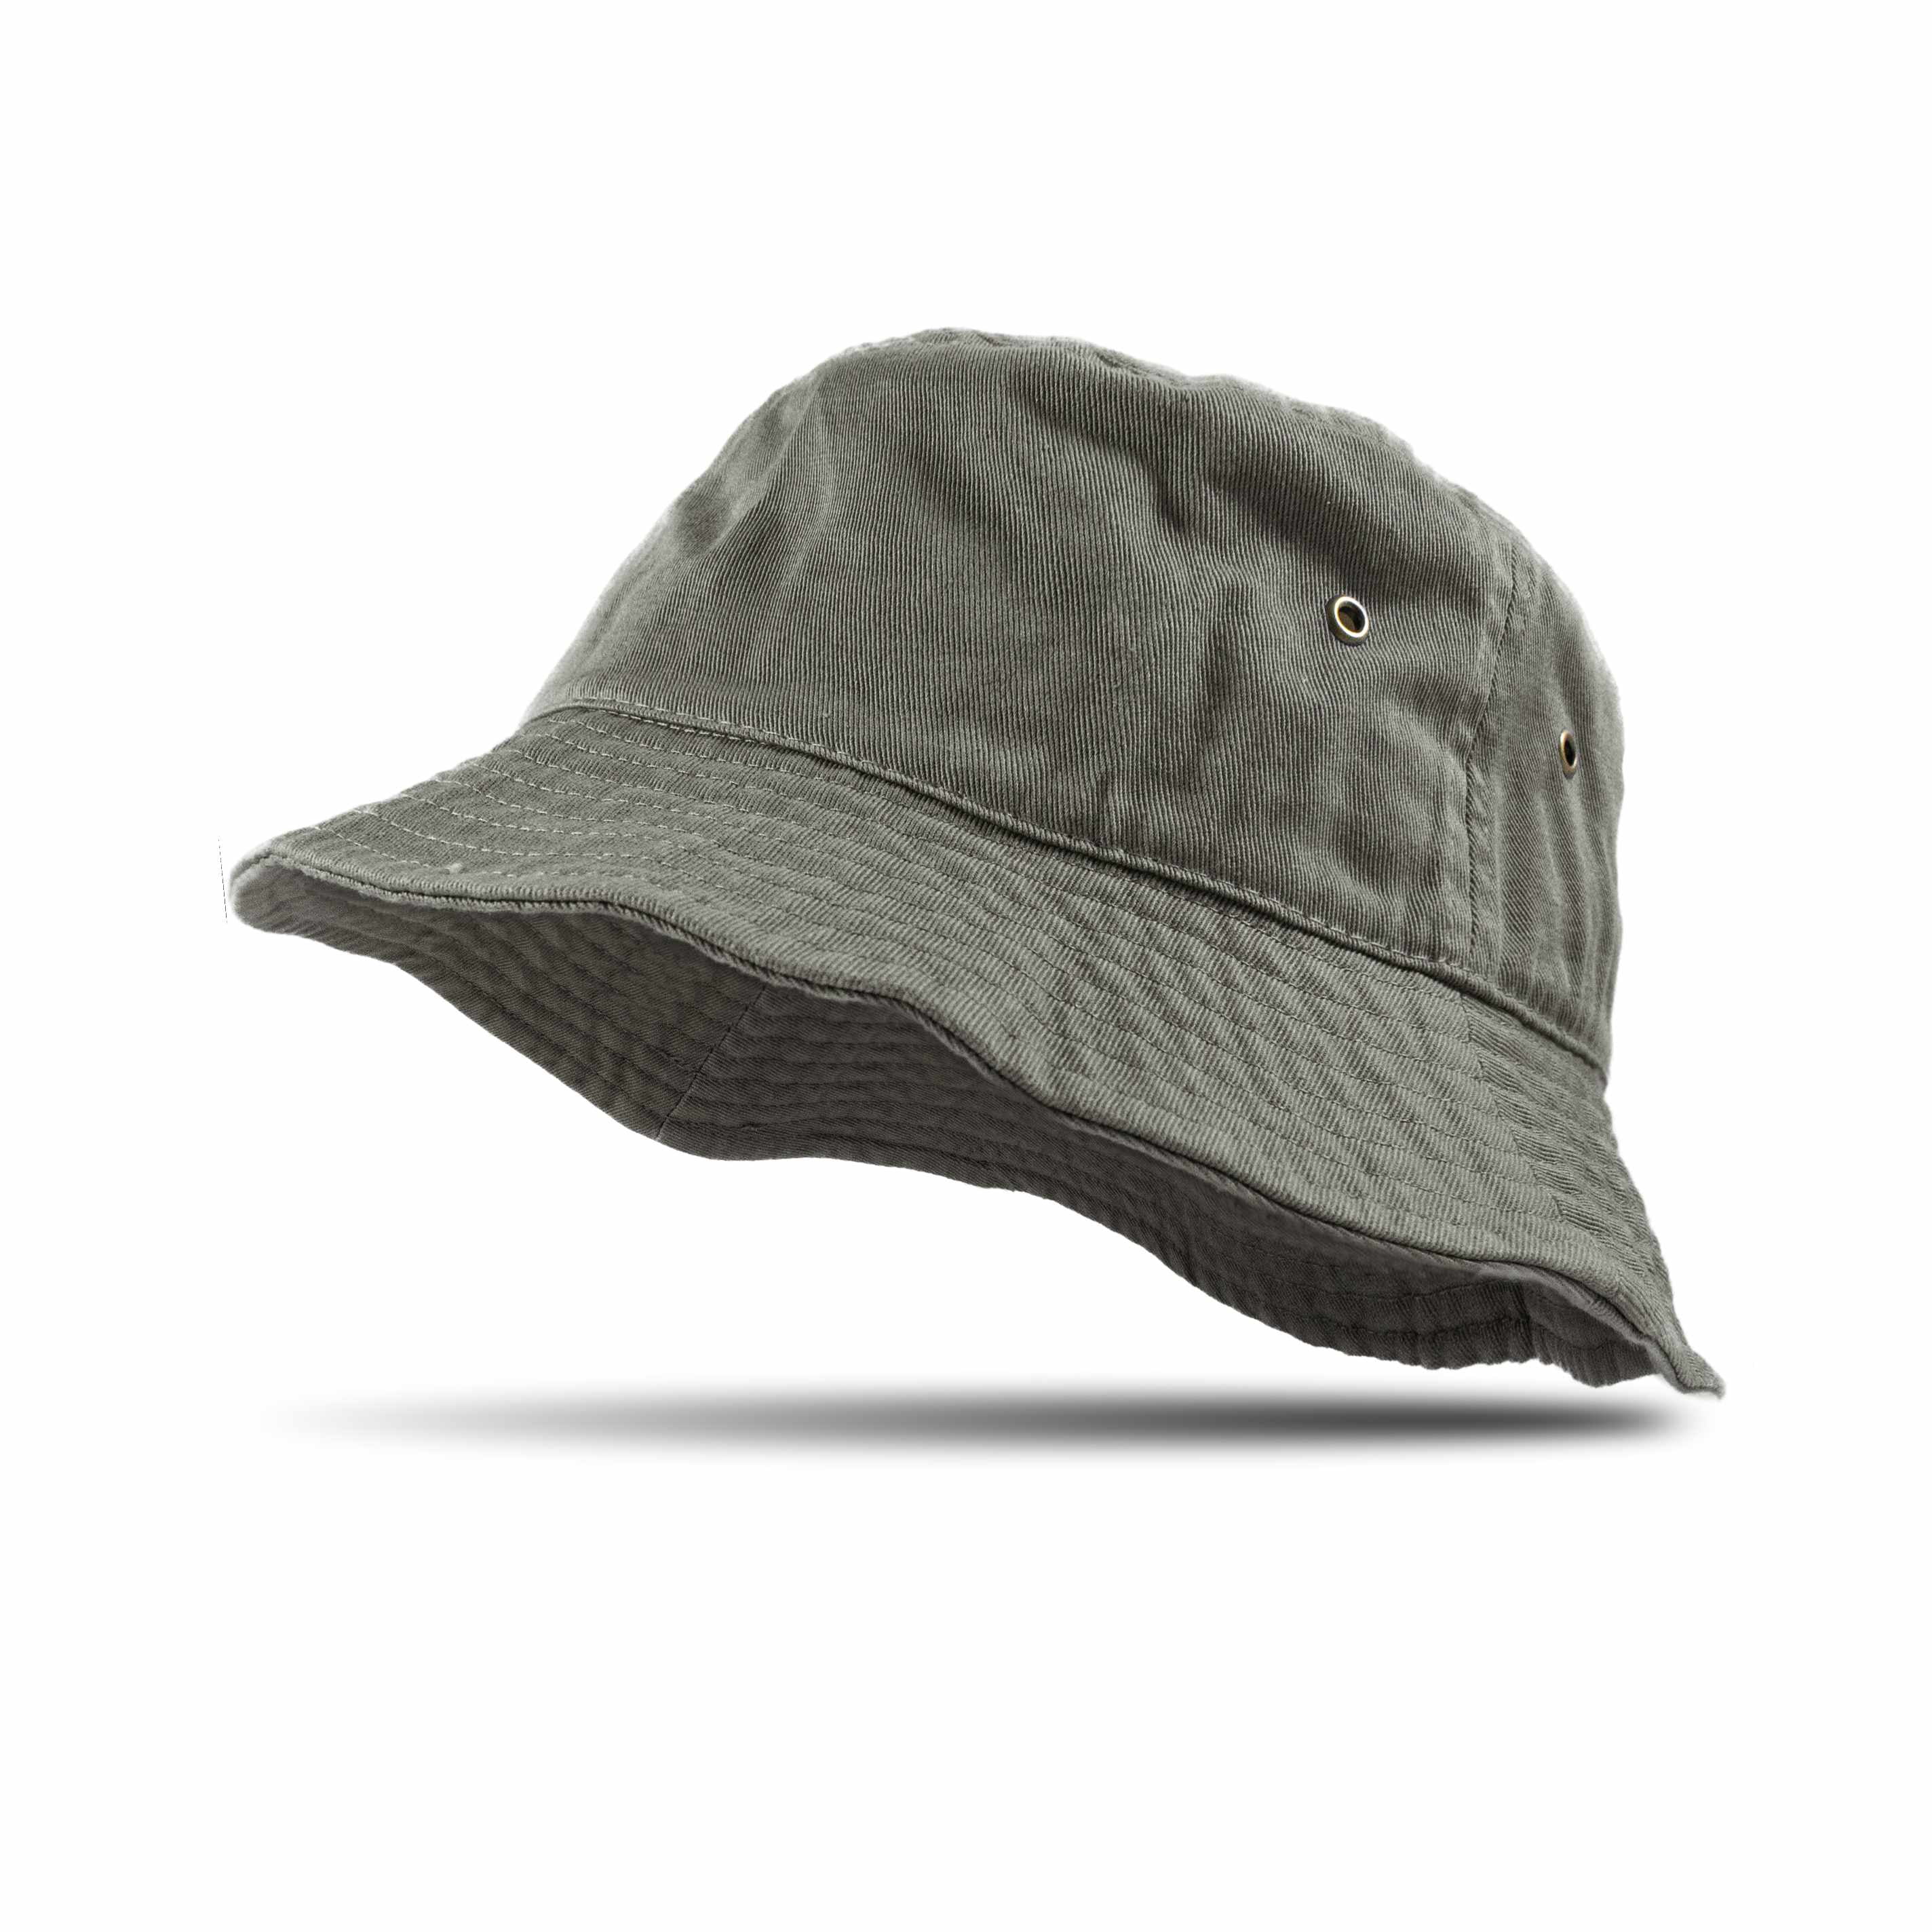 Bucket Hat For Men Women - Cotton Packable Fishing Cap, White S/M -  Walmart.com